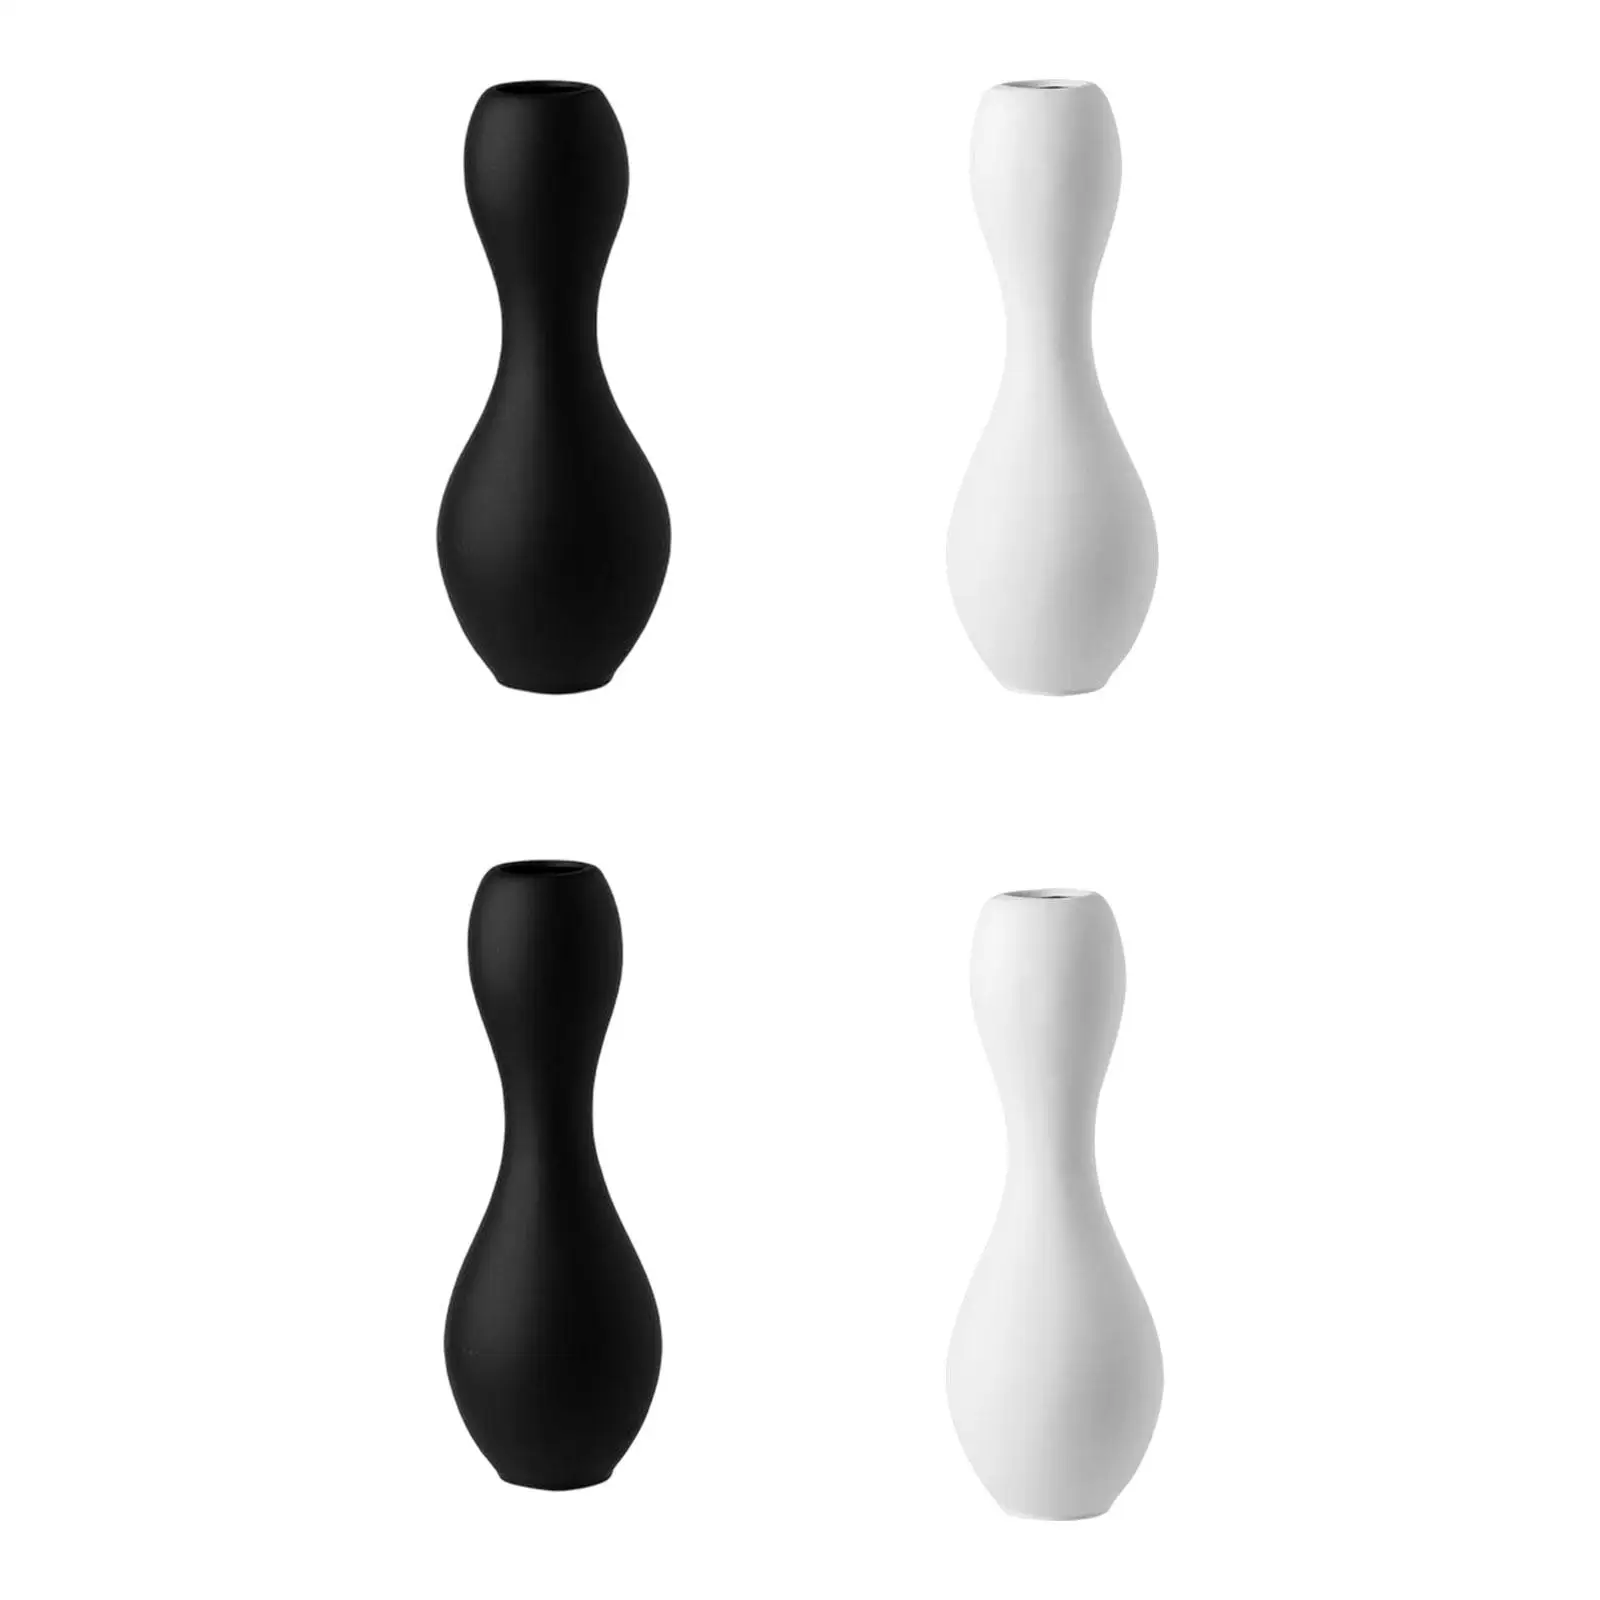 Nordic Style Ceramic Vase Decorative Vase Modern Minimalist Bowling Pin Centerpiece Elegant for Home Bedroom Office Desk Decor